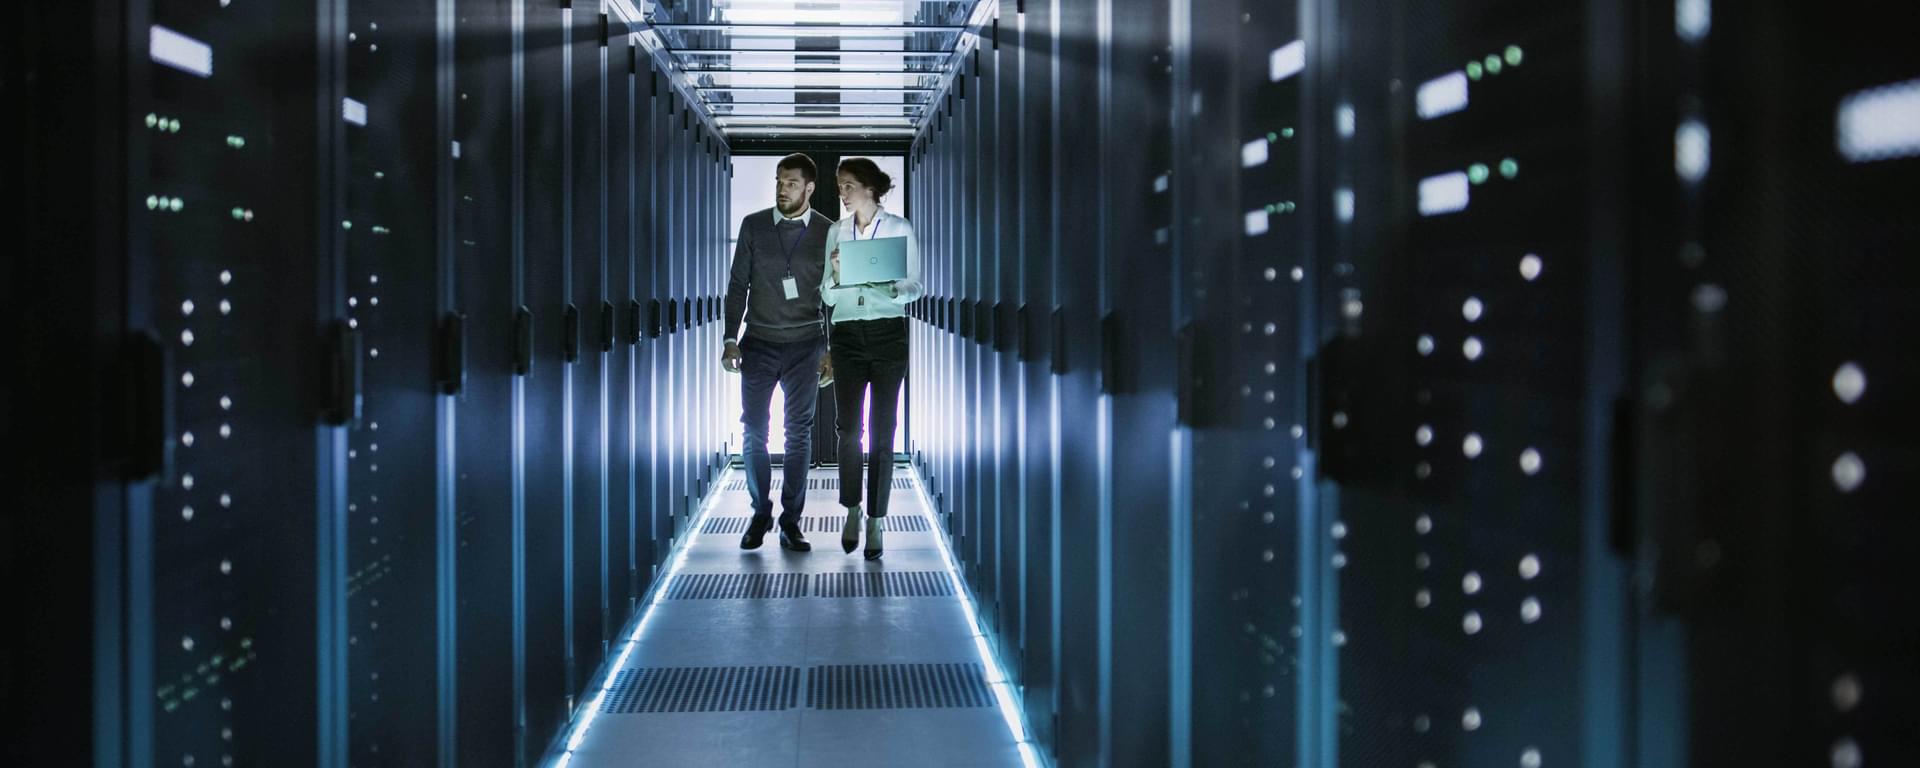 People walking through rack servers in data centre